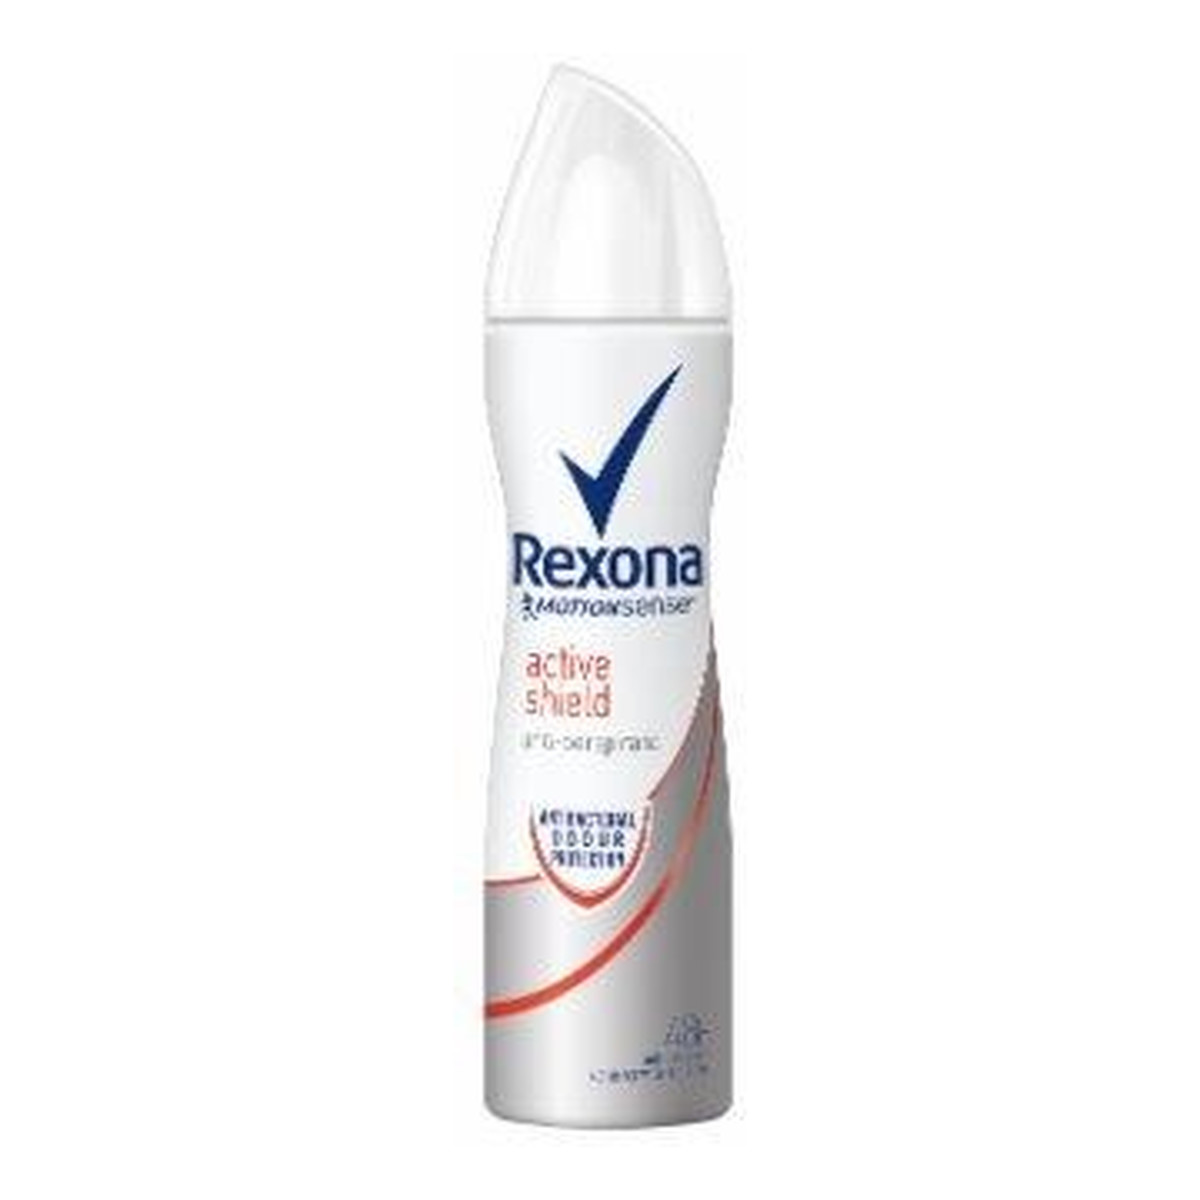 Rexona Active Shield Motion Sense Woman Dezodorant spray 150ml